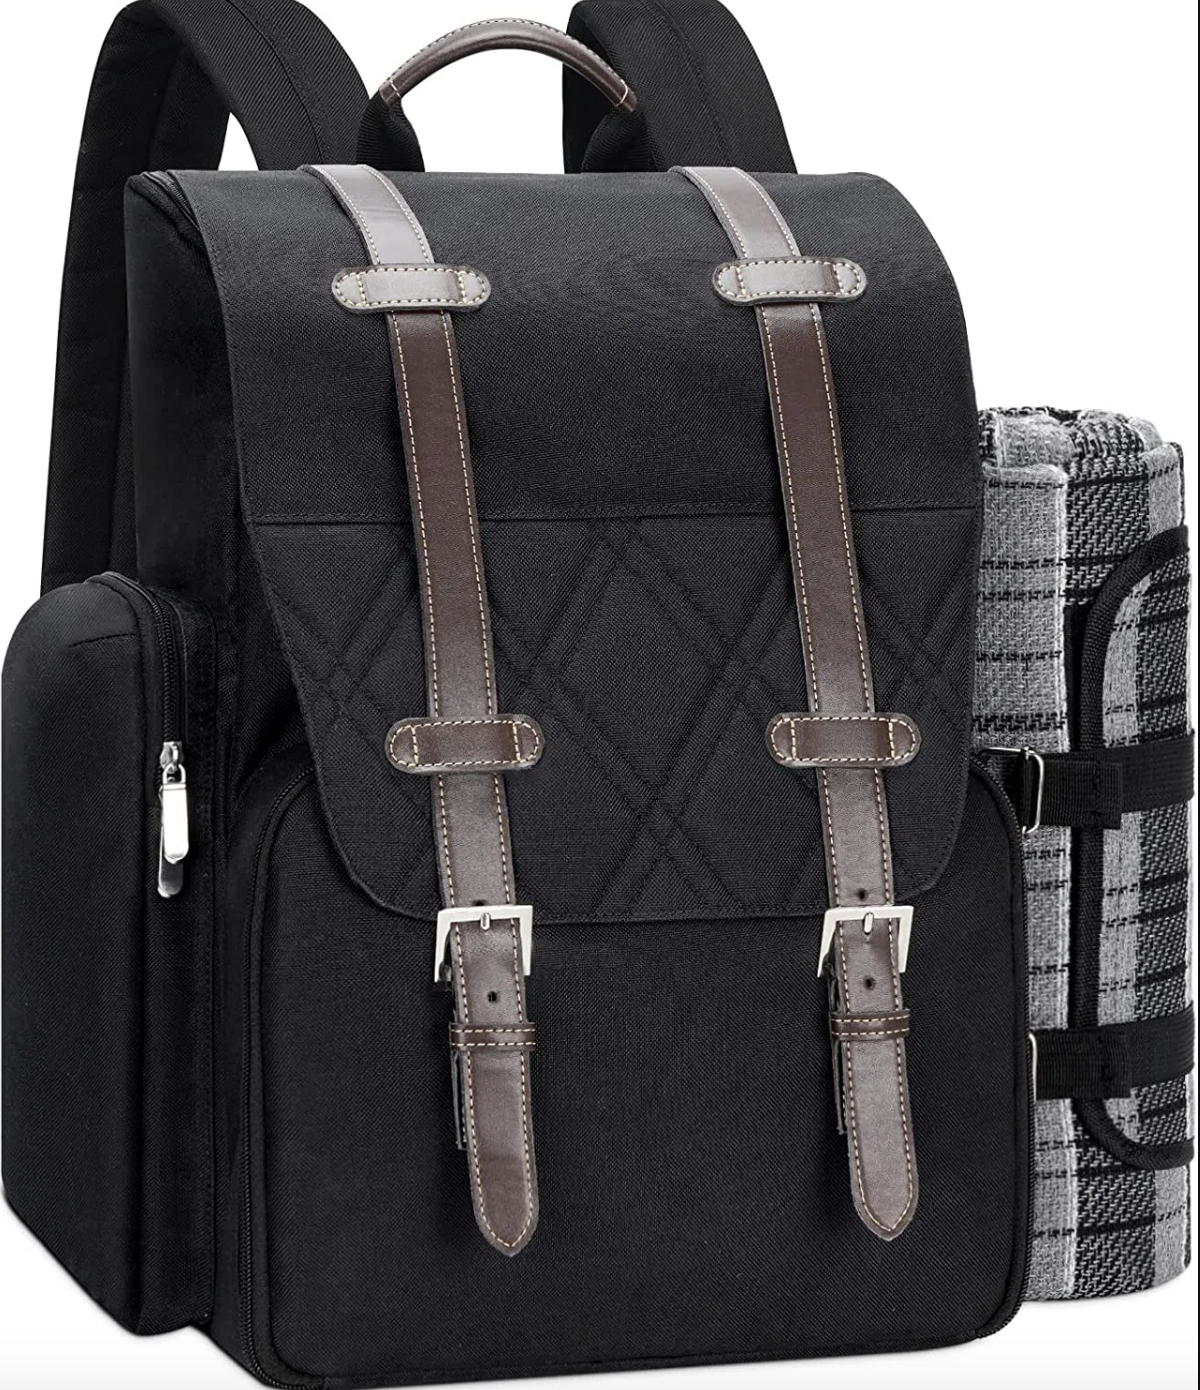 Crestone Picnic Backpack